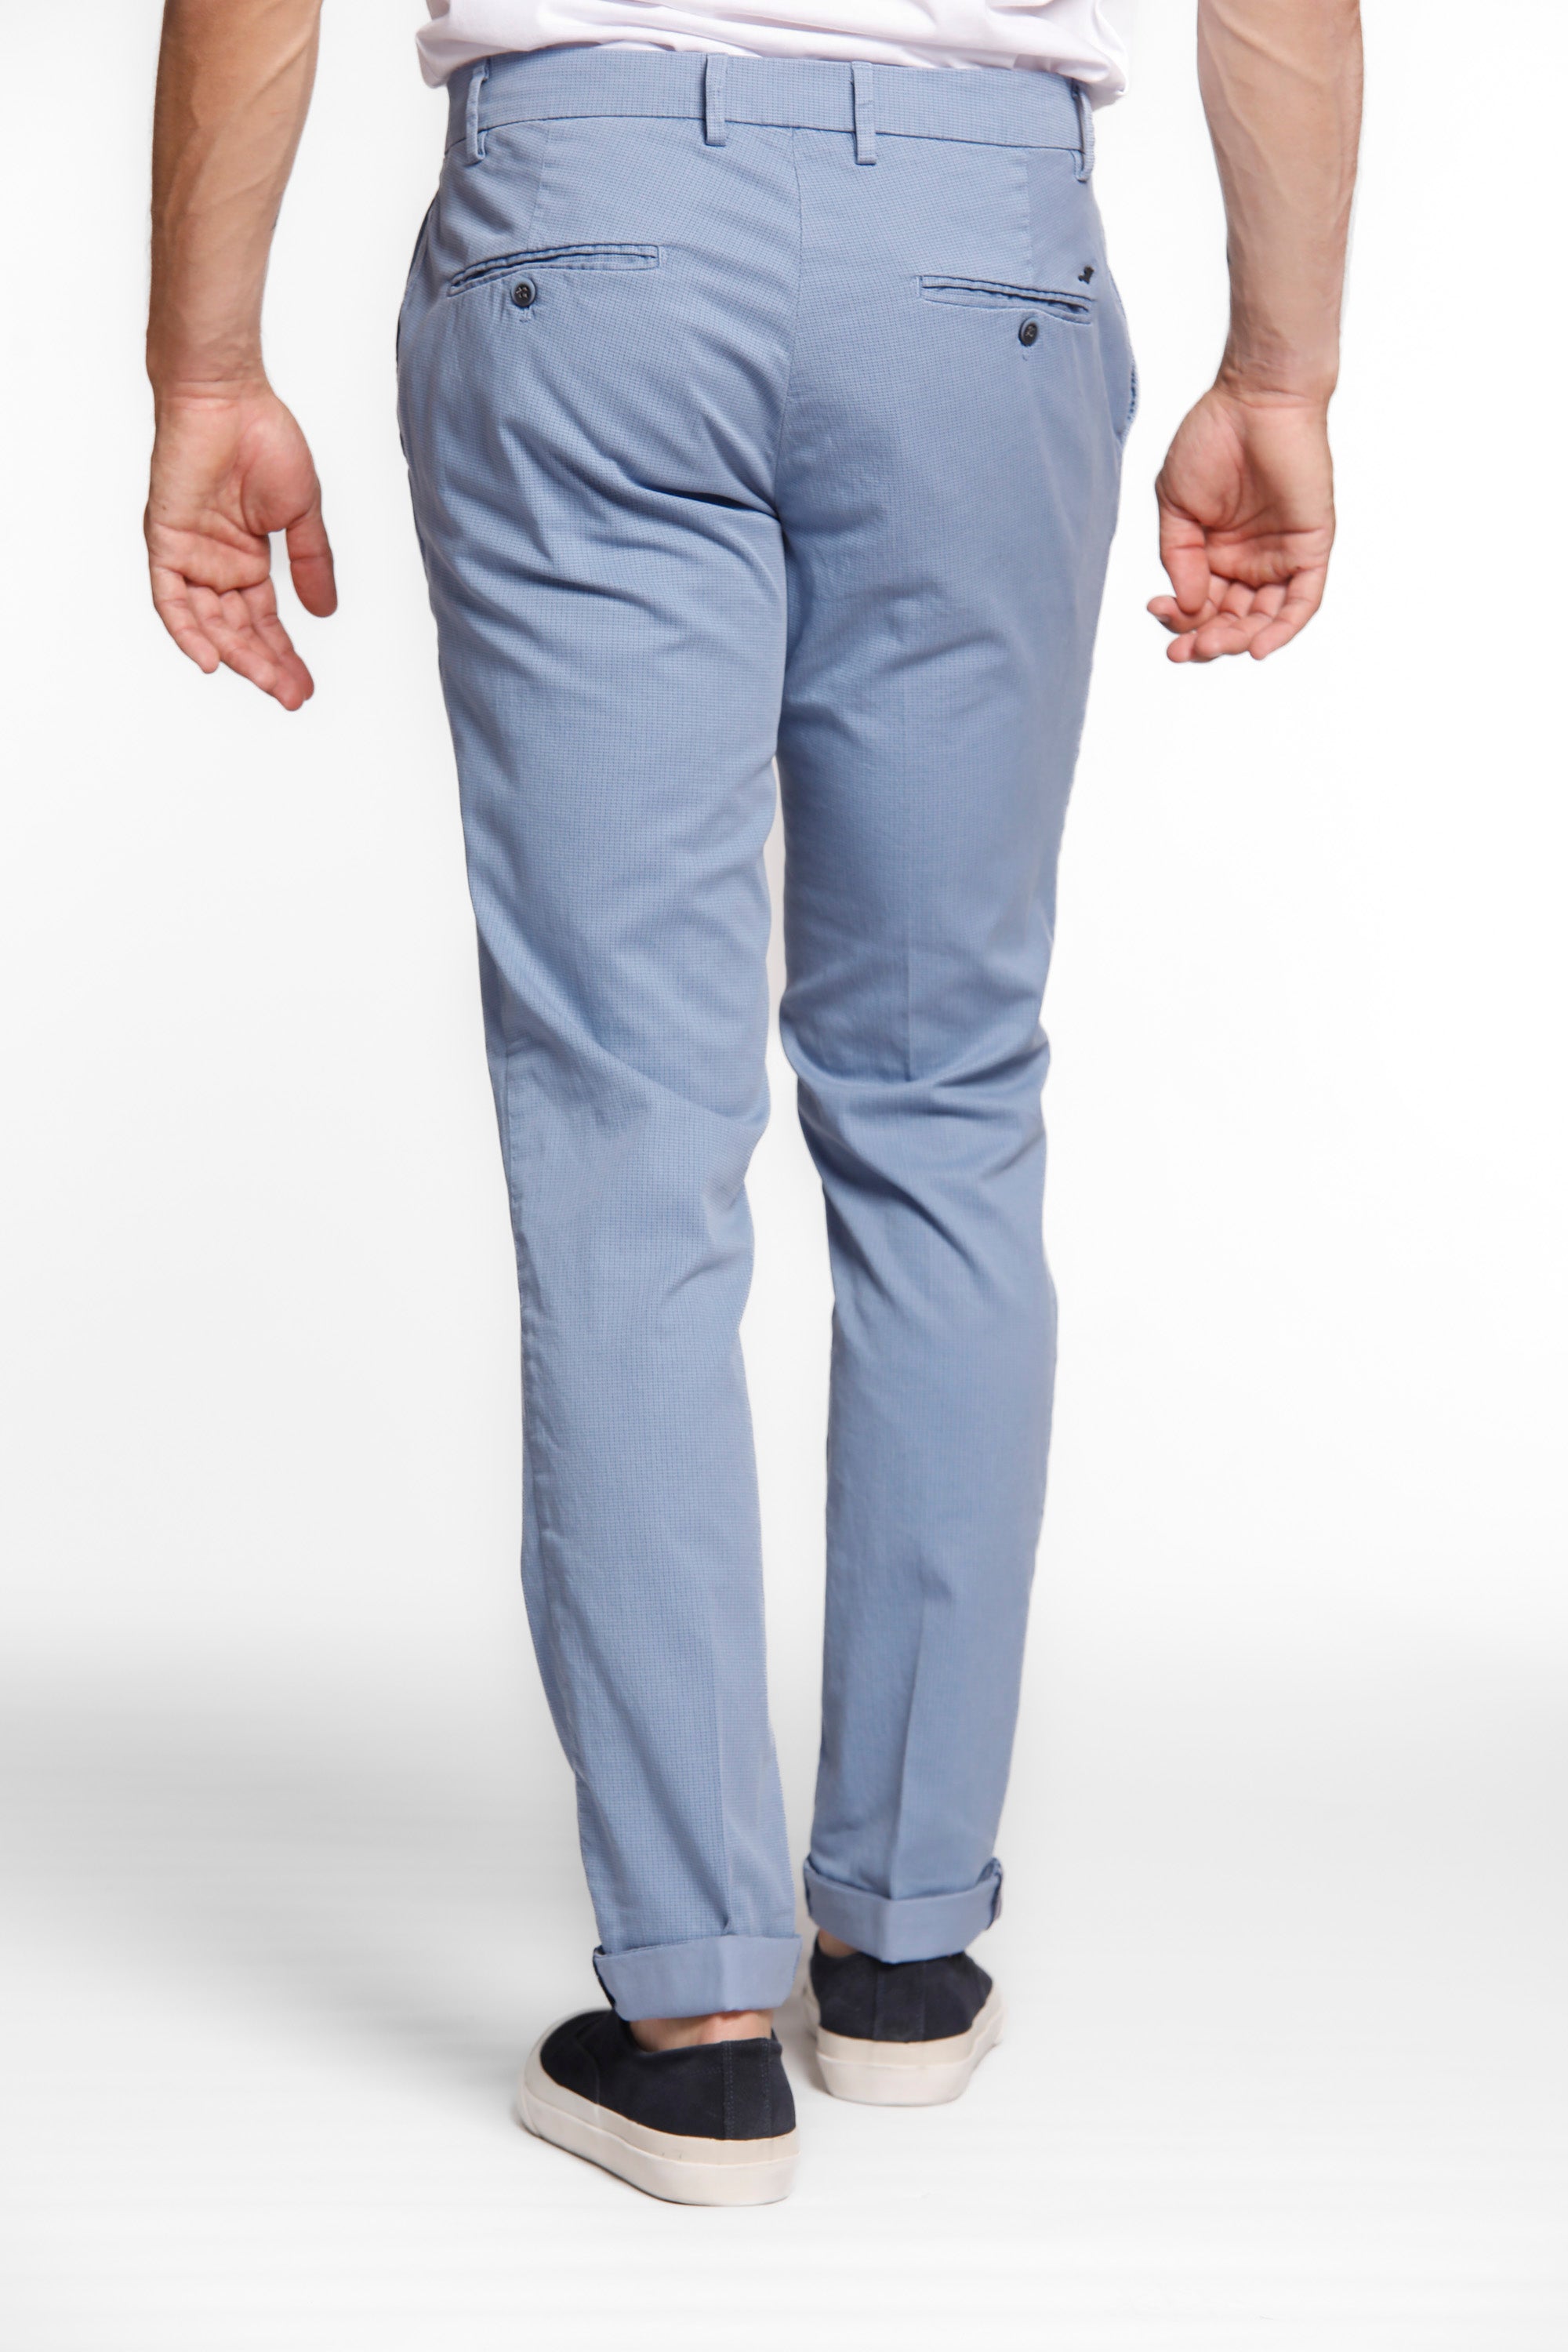 Milano Style pantalone chino uomo in twill e tencel microstampa extra slim